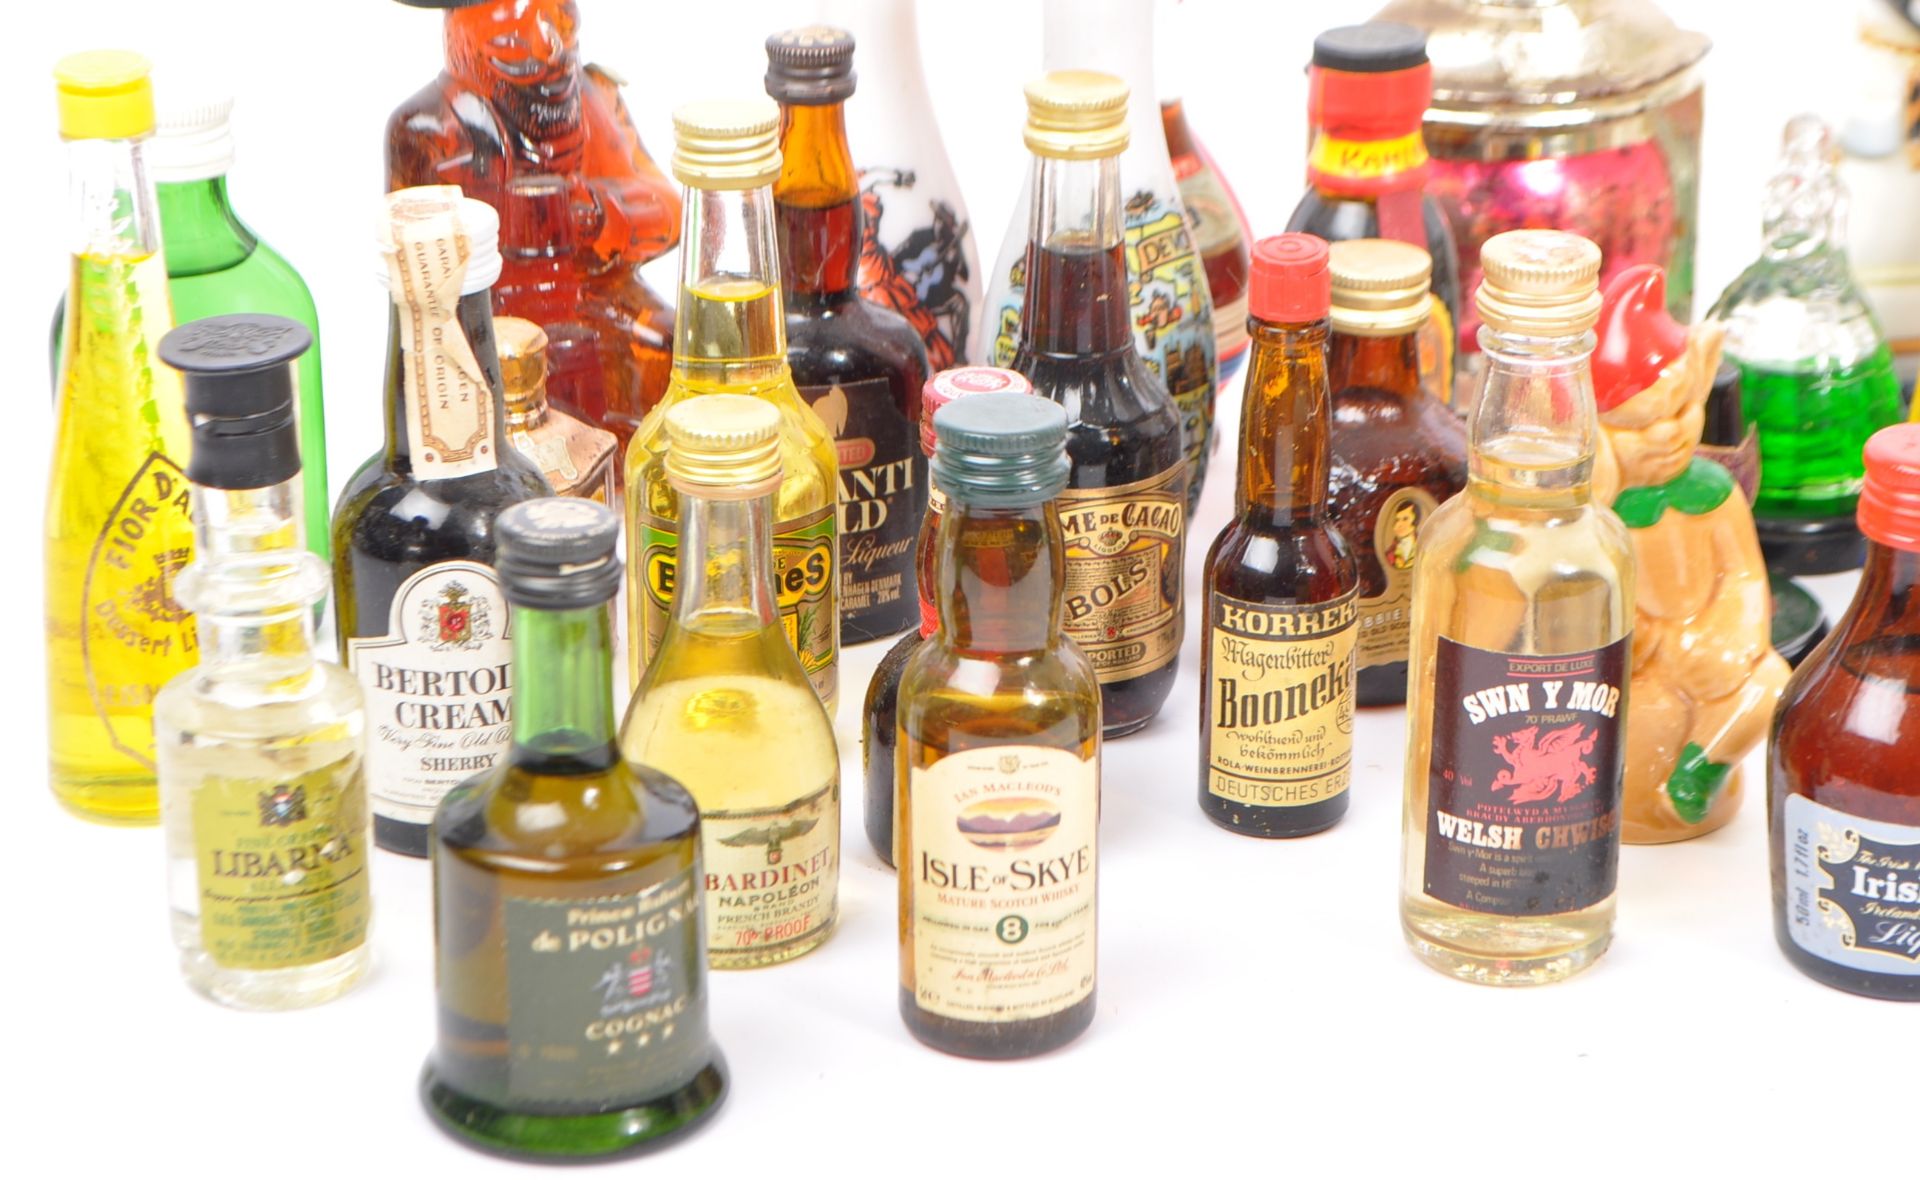 COLLECTION OF MINIATURE SOUVENIR ALCOHOL BOTTLES - Image 2 of 4